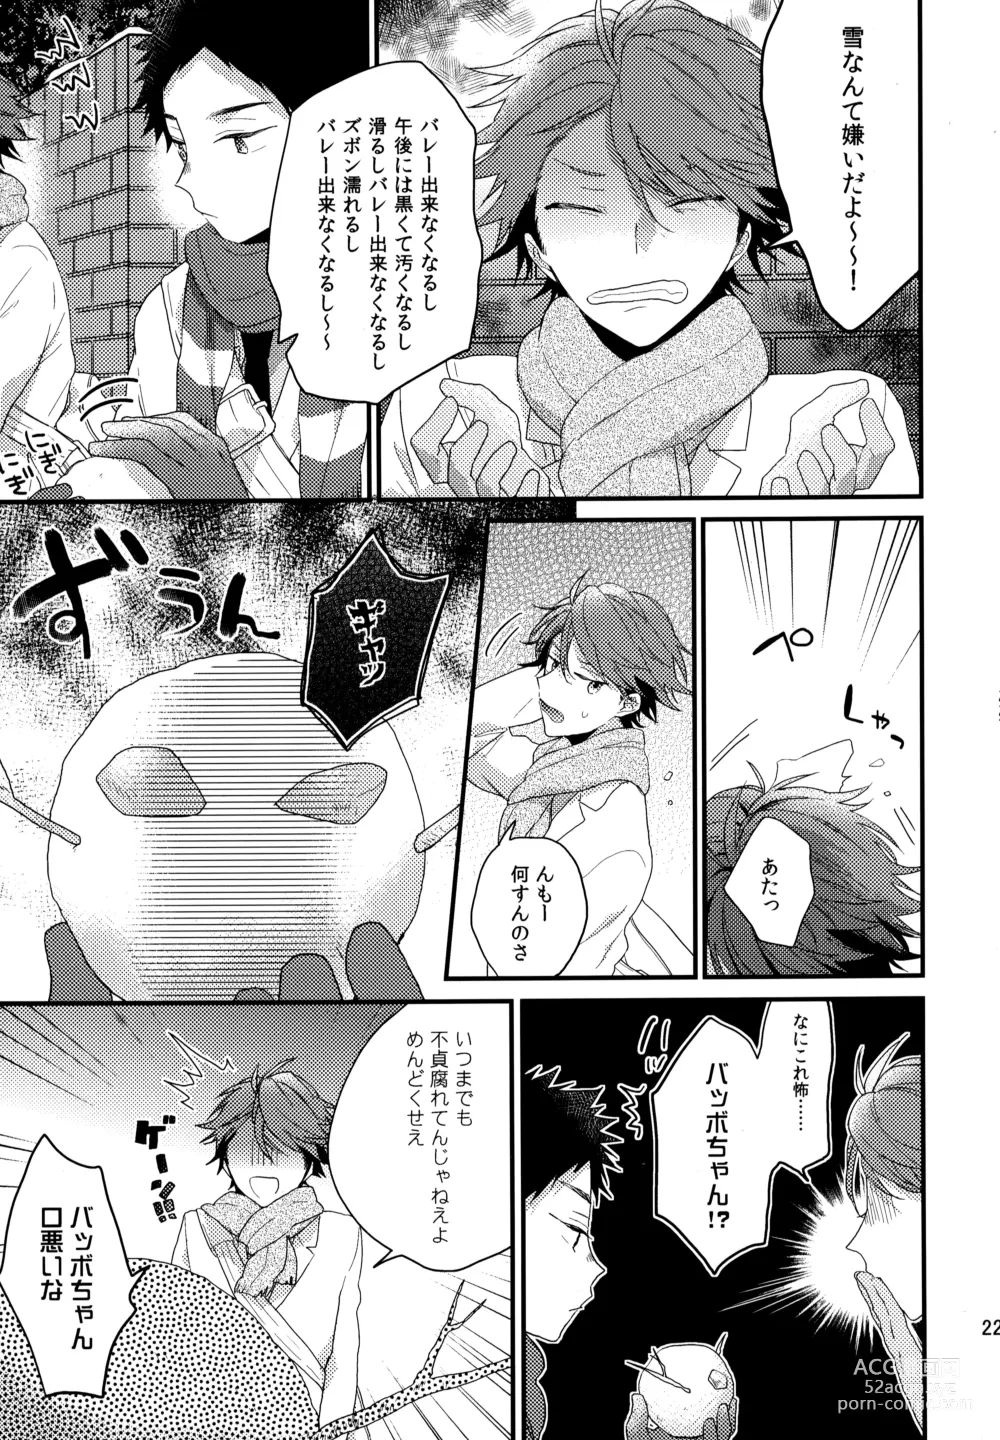 Page 226 of doujinshi Uchidome OiIwa Sairoku 2